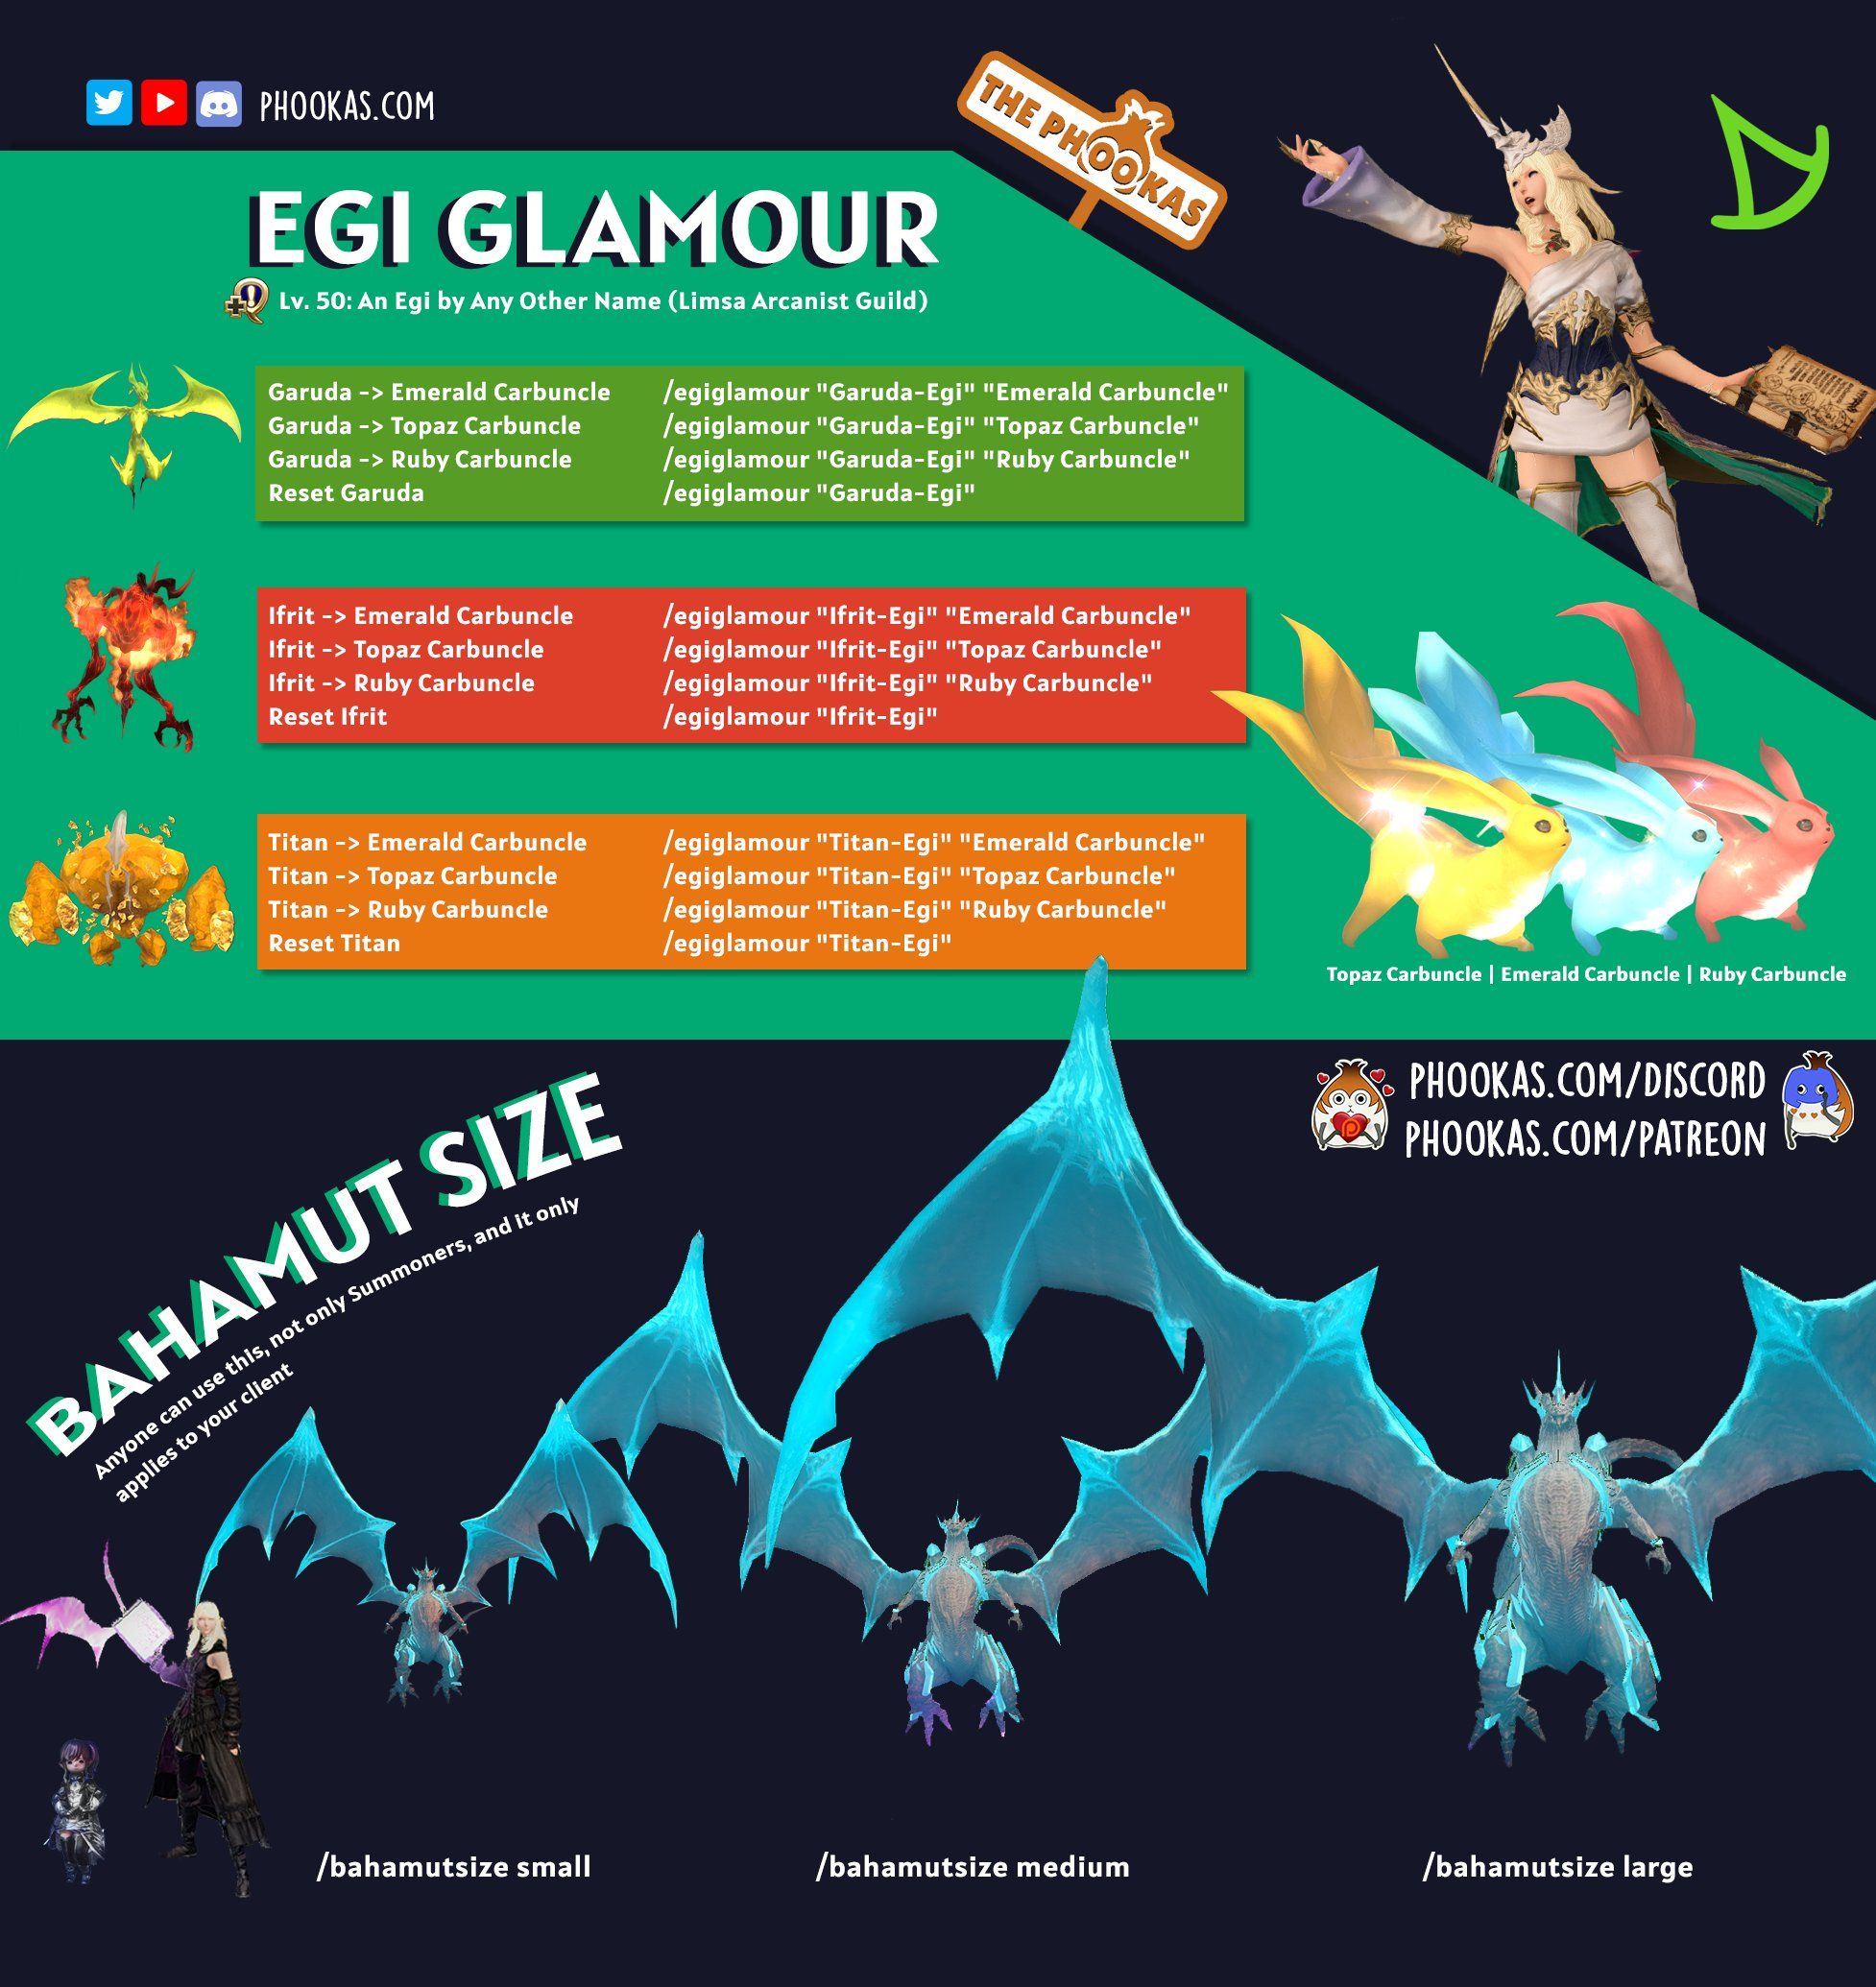 Final Fantasy 14 The Phookas infographics on egi glamors